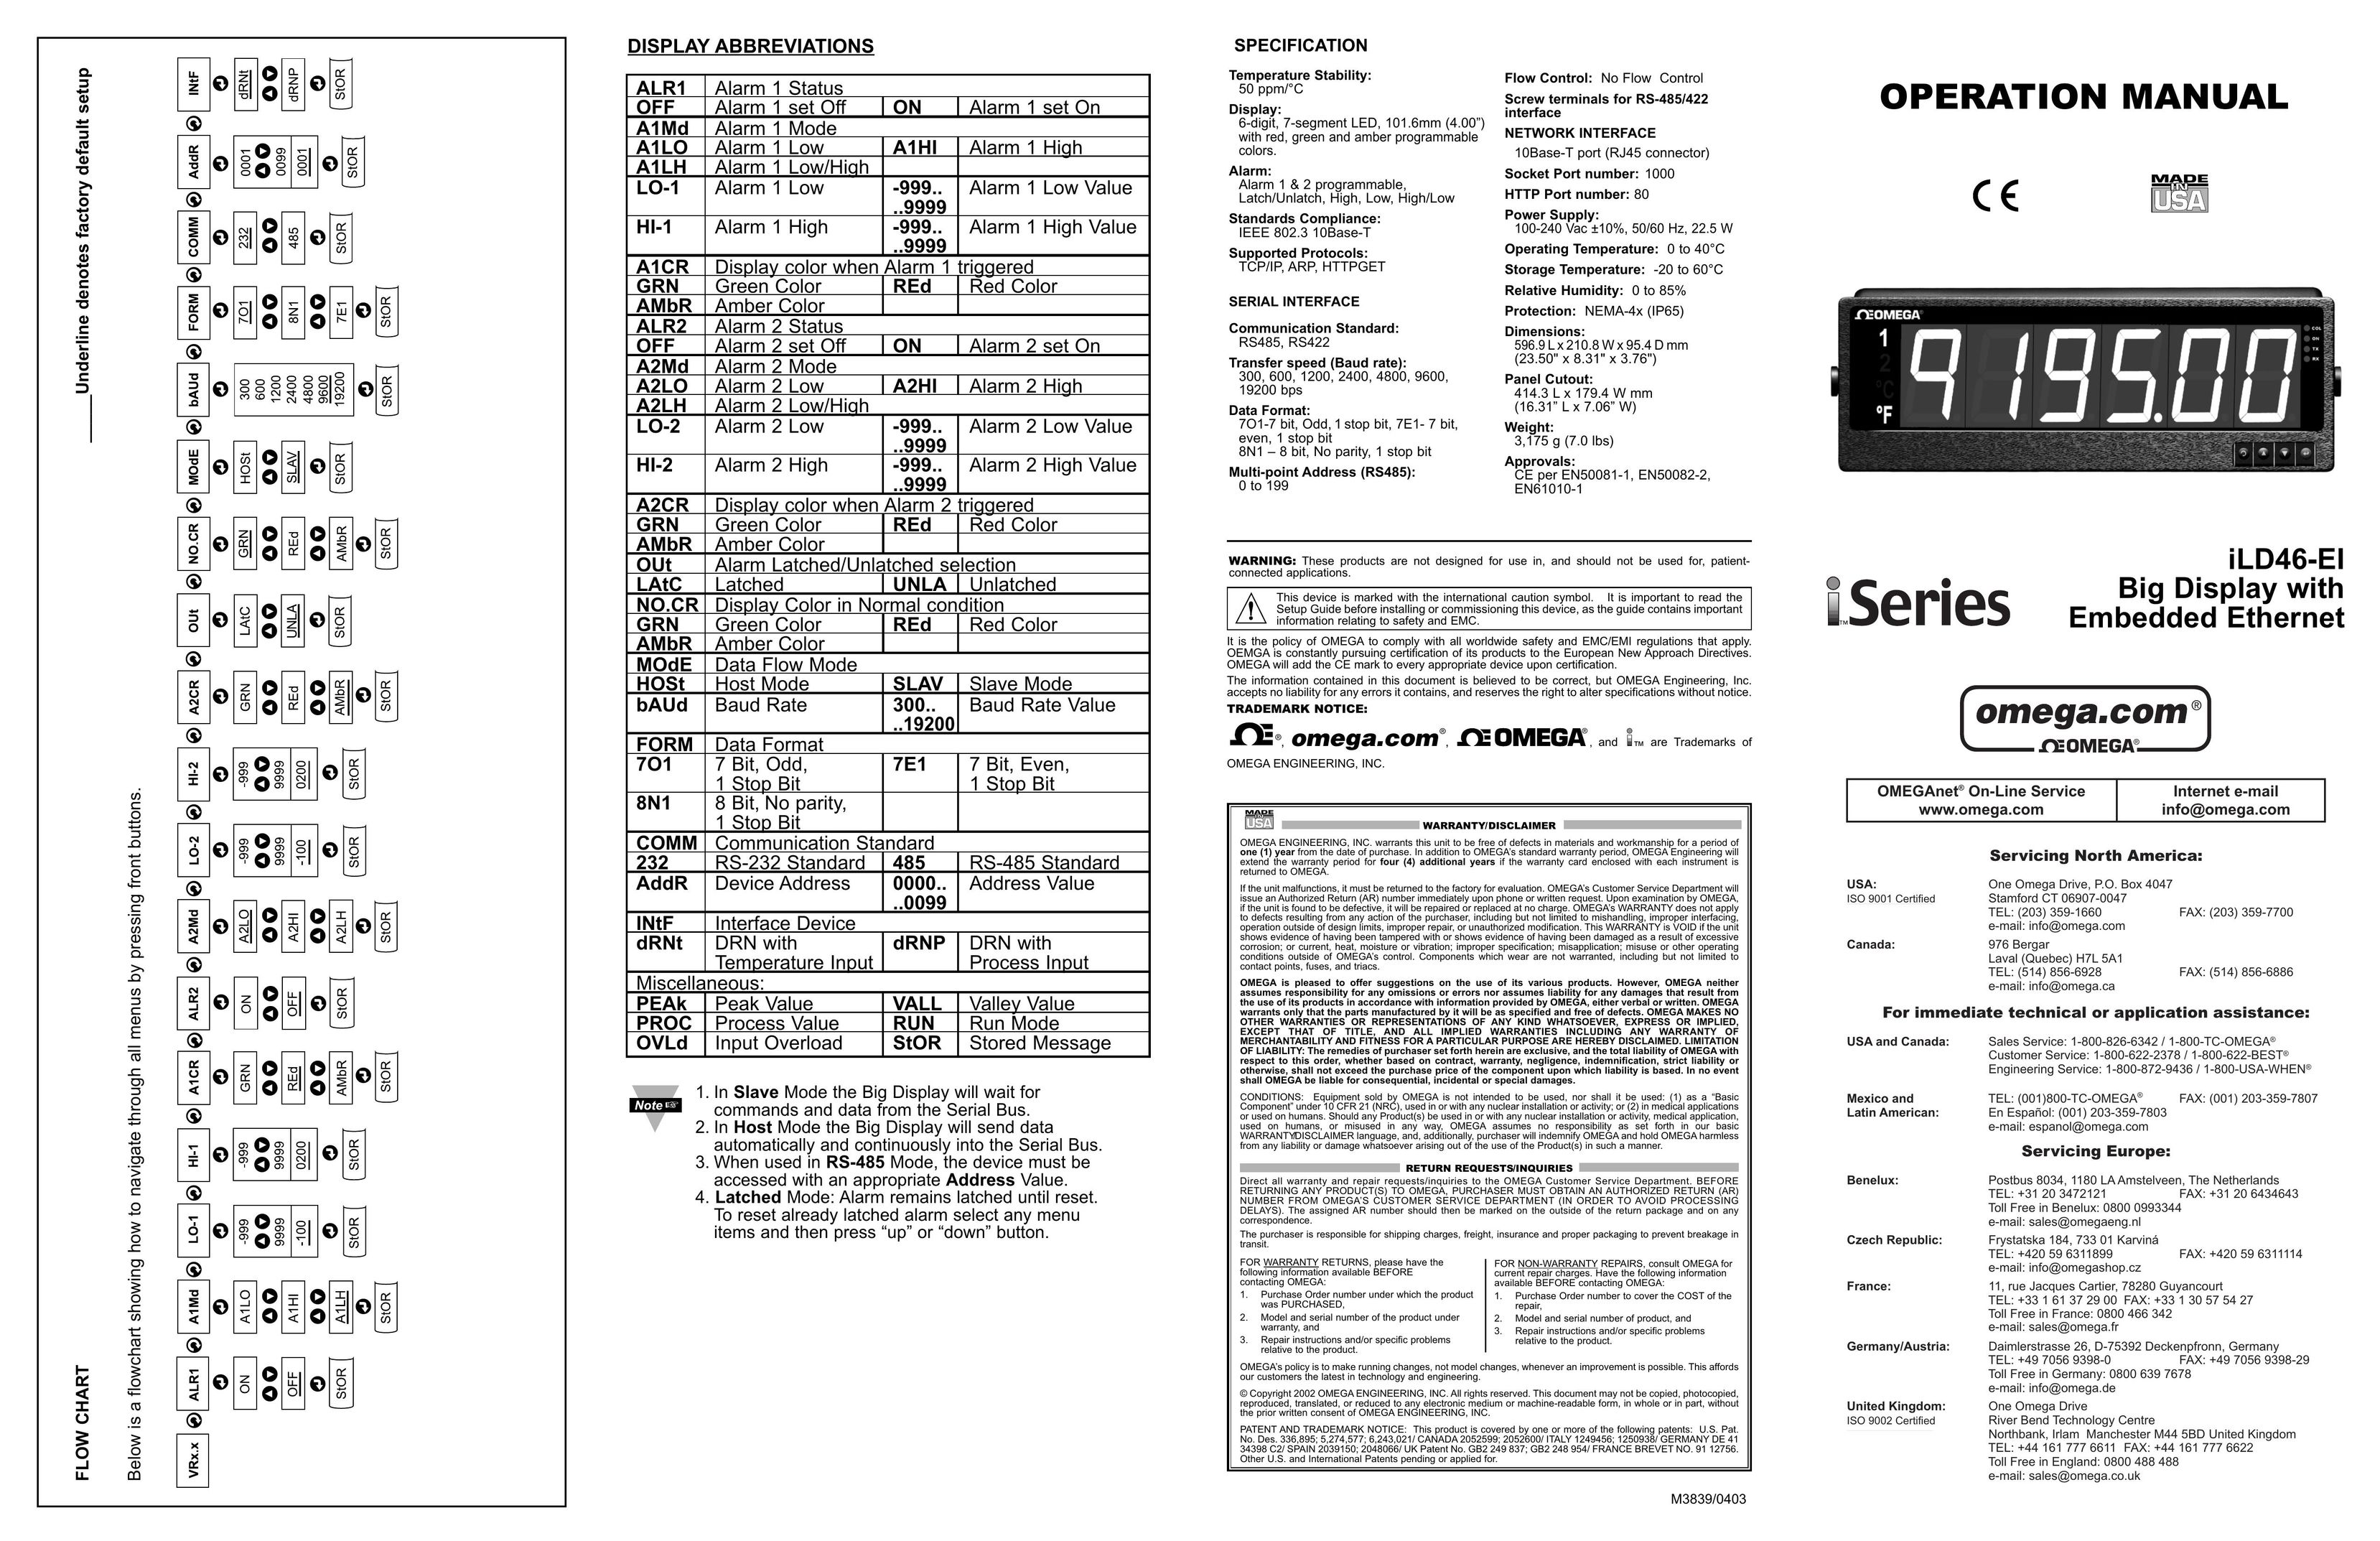 Omega Vehicle Security iLD46-EI Series Network Card User Manual